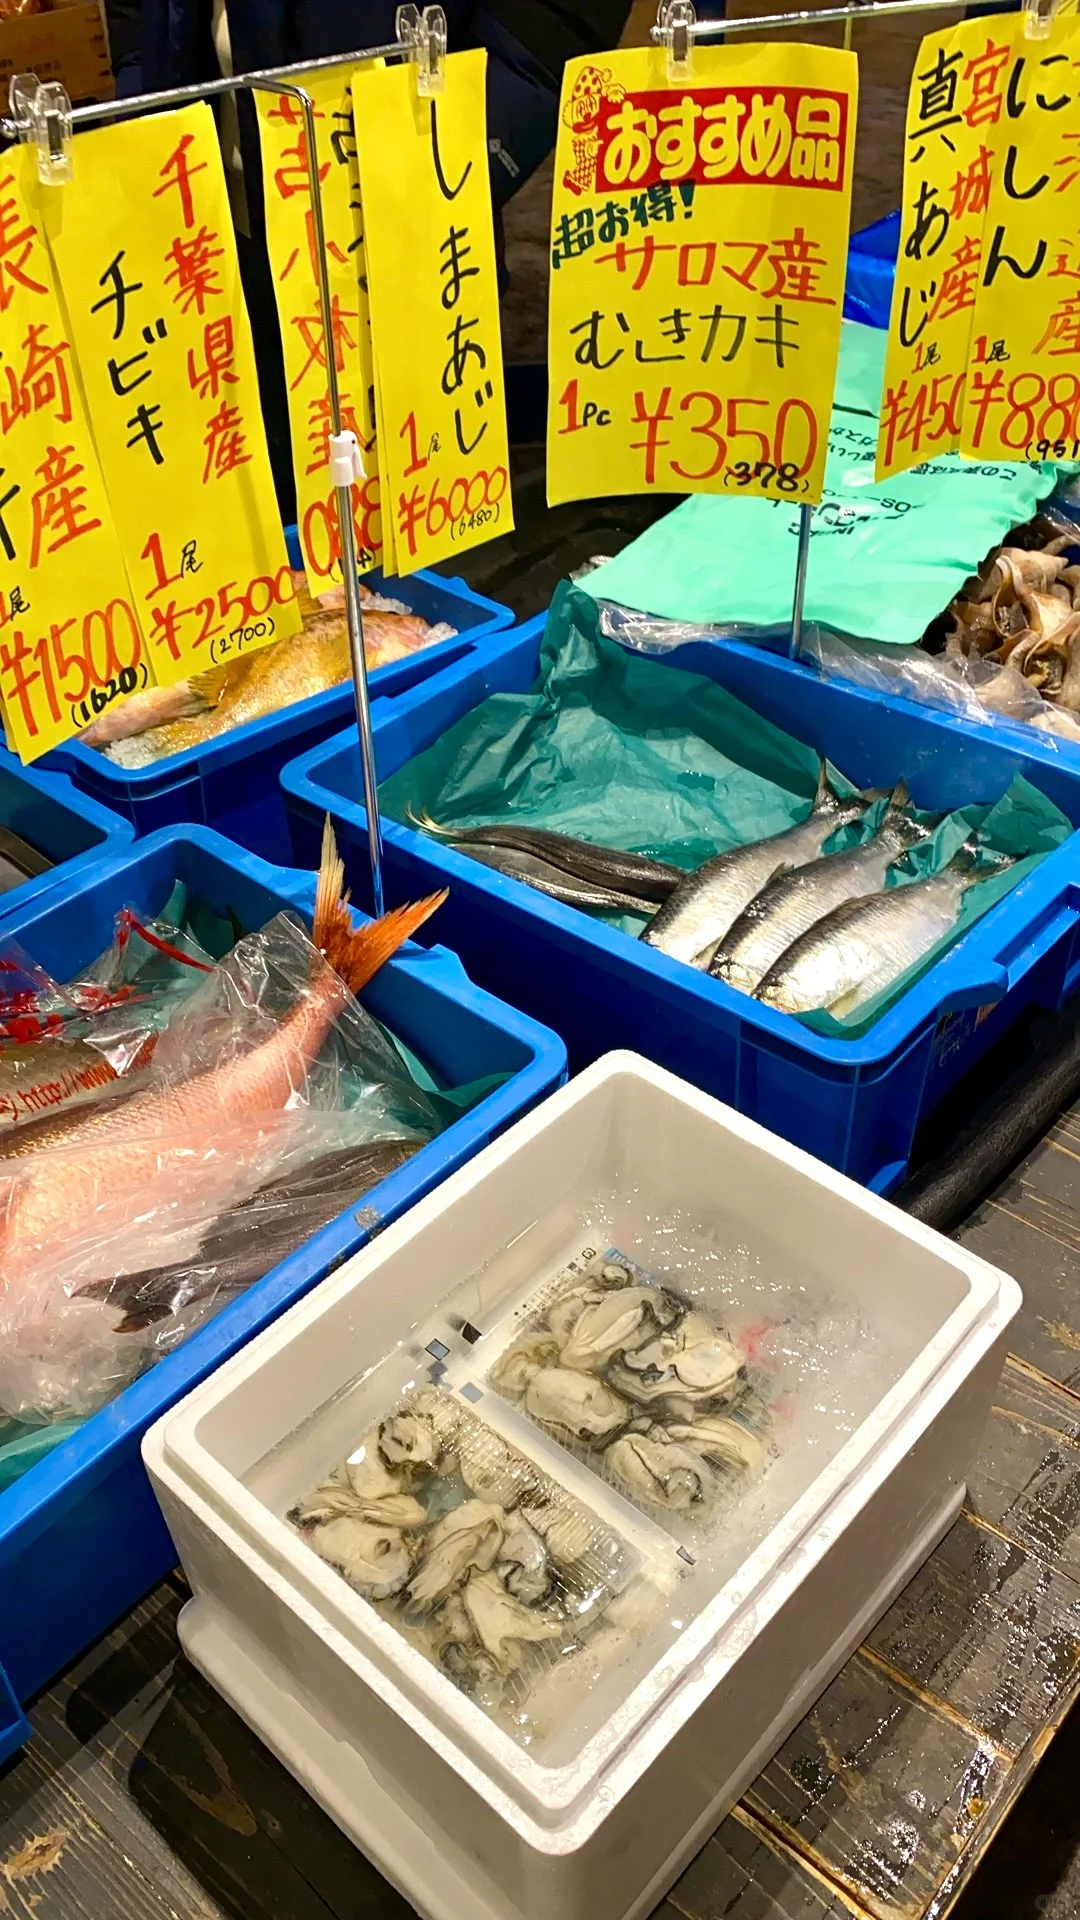 Sapporo/Hokkaido-Hokkaido Sapporo Shihachi Fish Shop Kita 24jo Branch, 2000 yen eel rice is really delicious